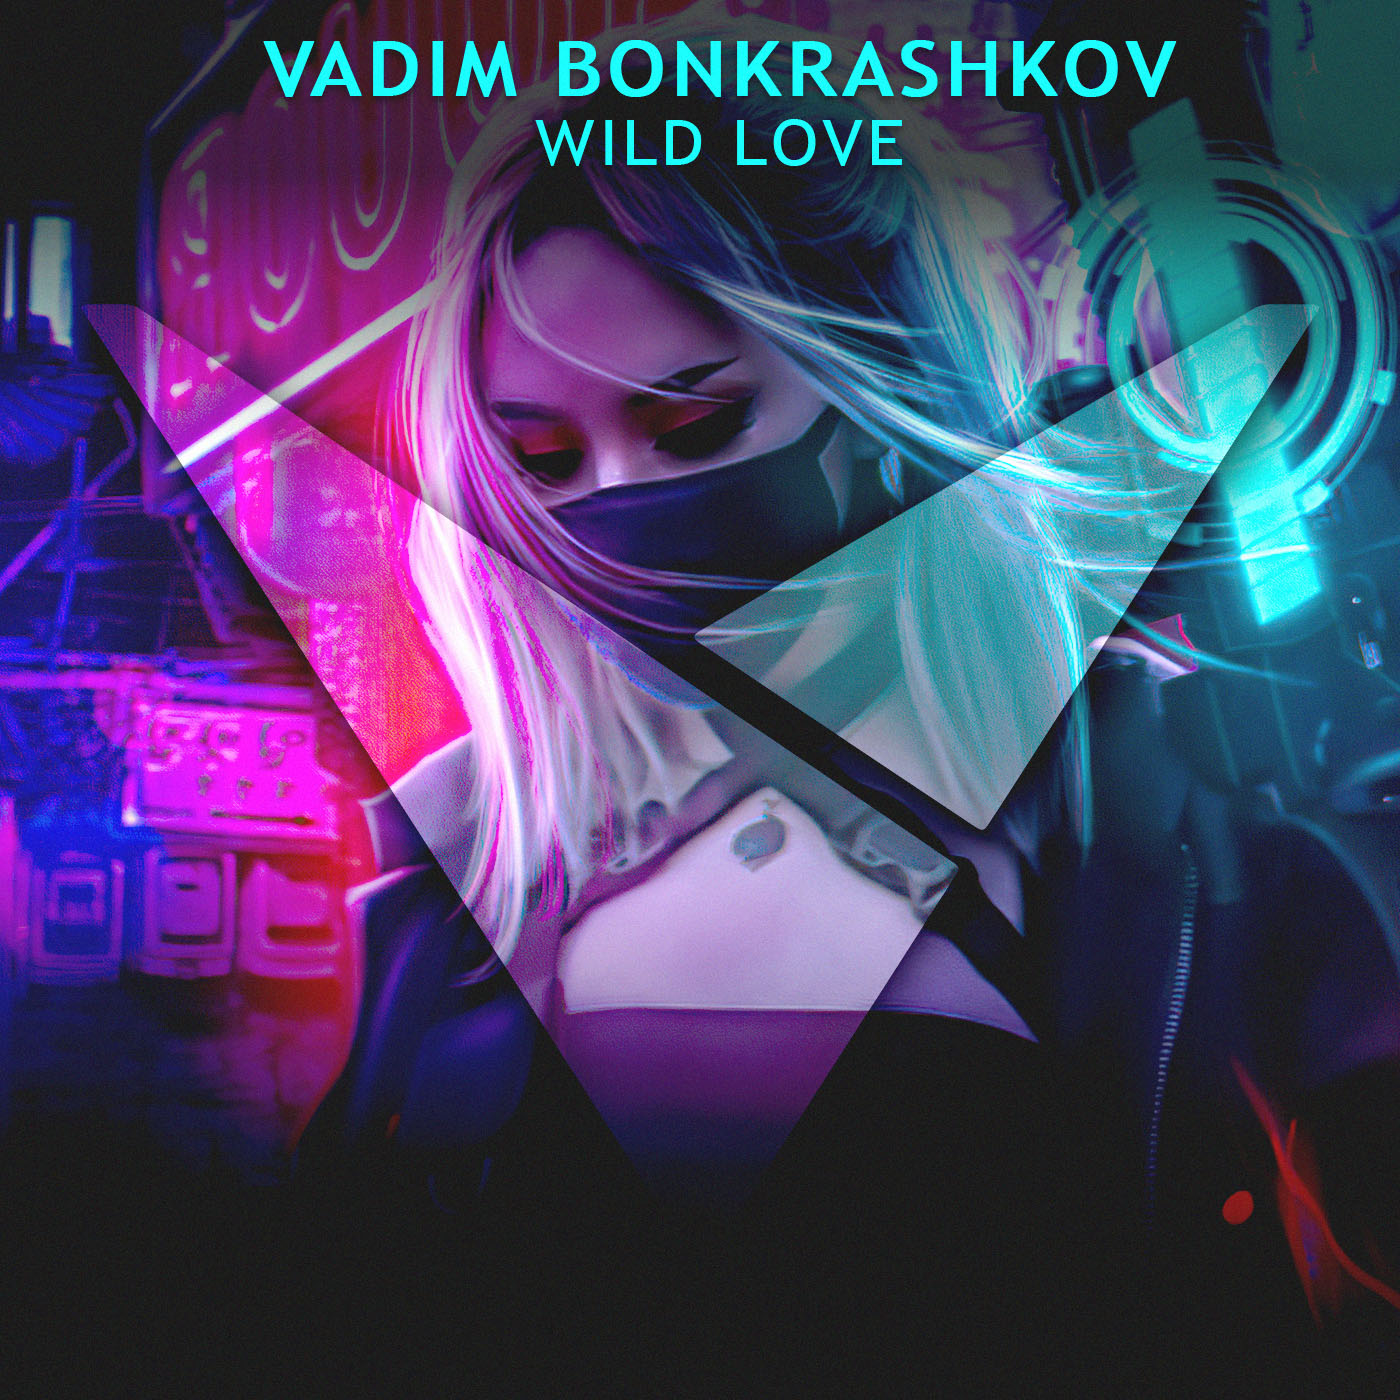 Vadim Bonkrashkov – Wild Love (Future Rave) [Ableton Live Template]